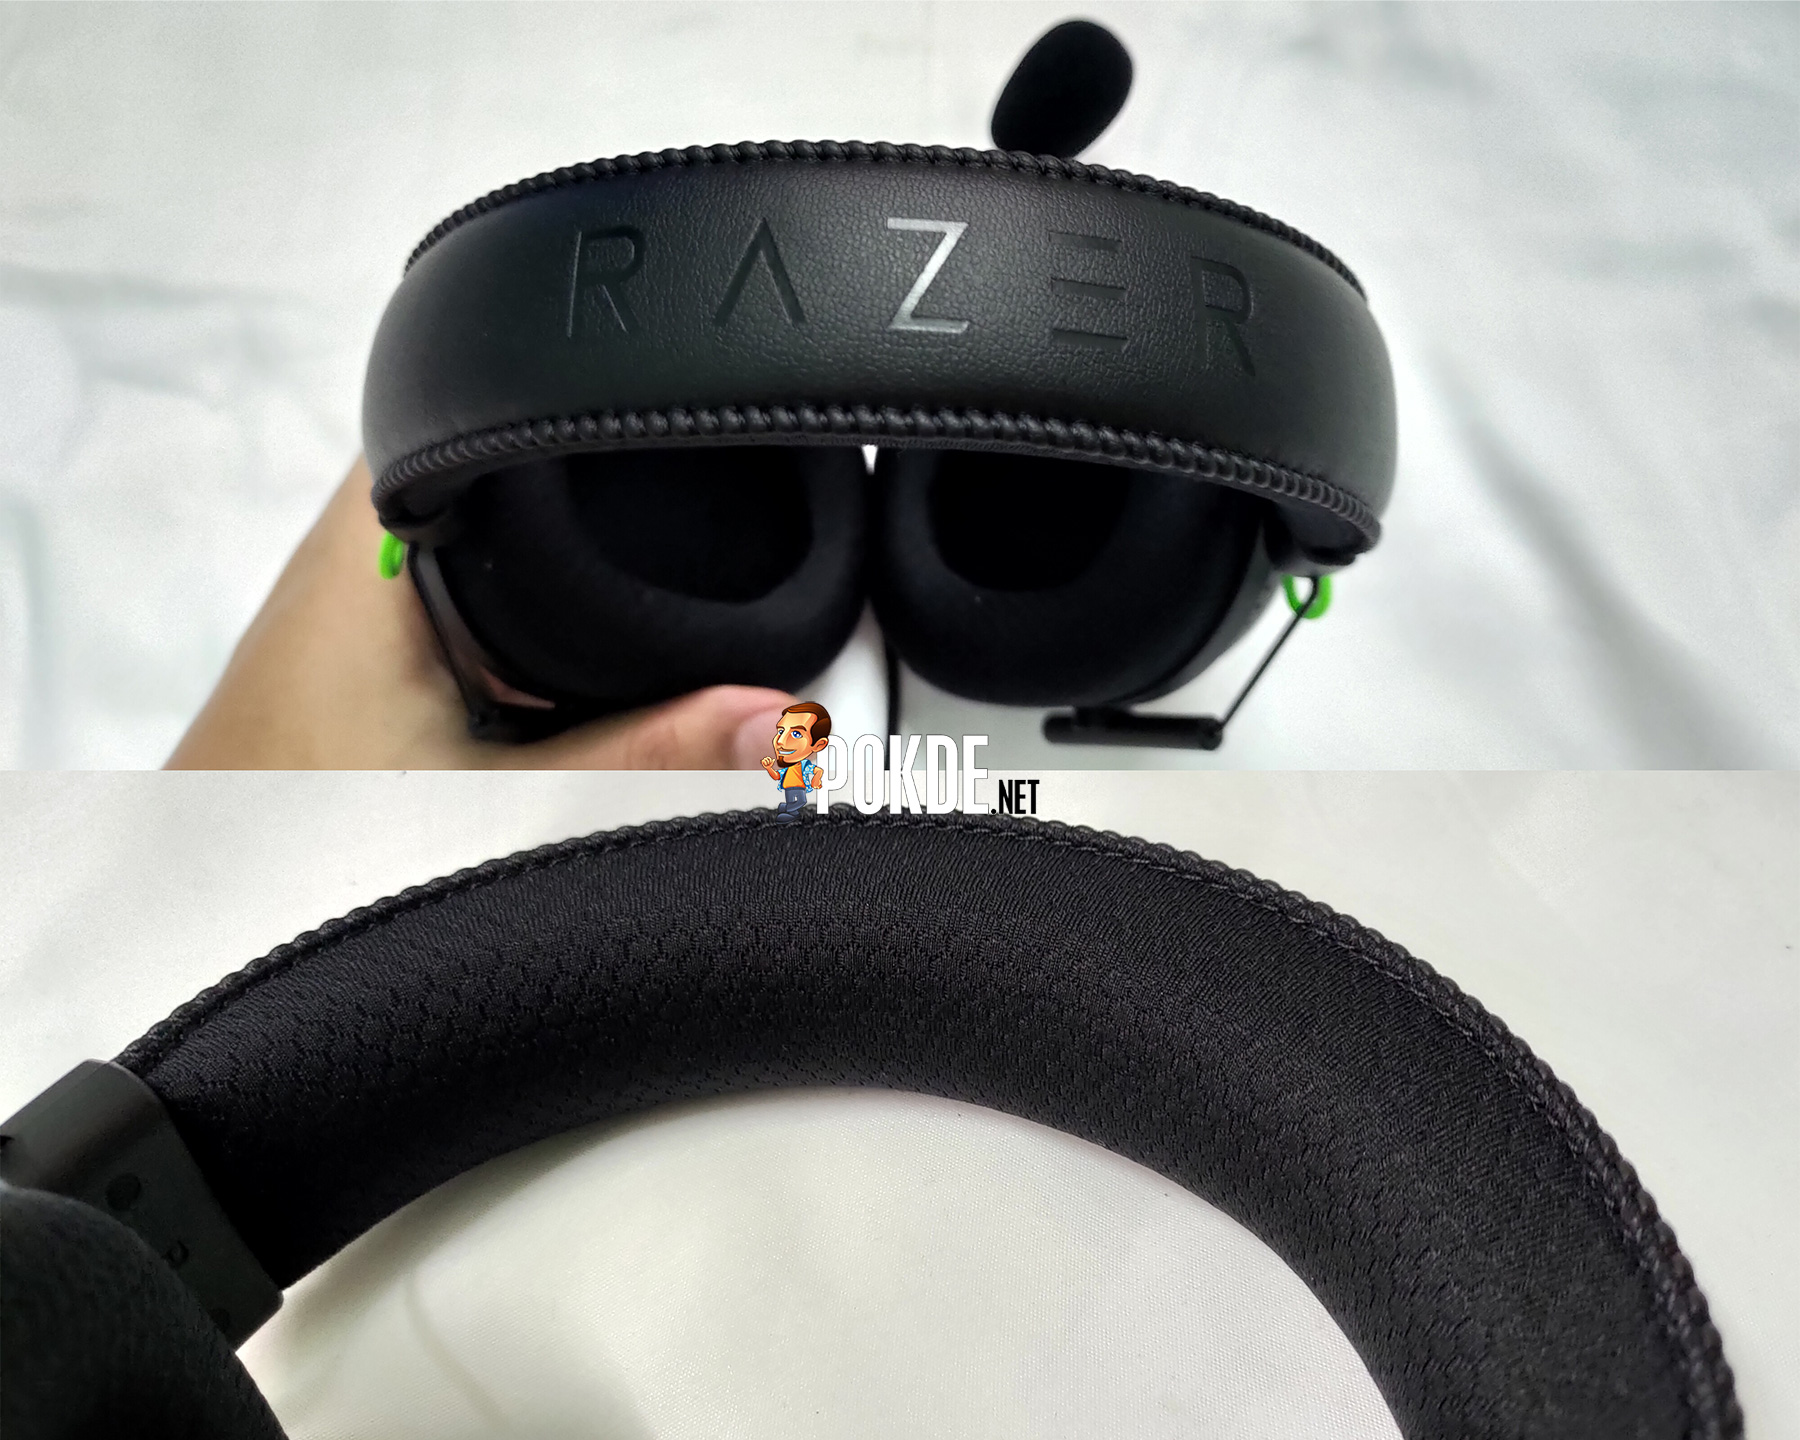 Razer BlackShark V2 unveiled: Specs, features, release date and